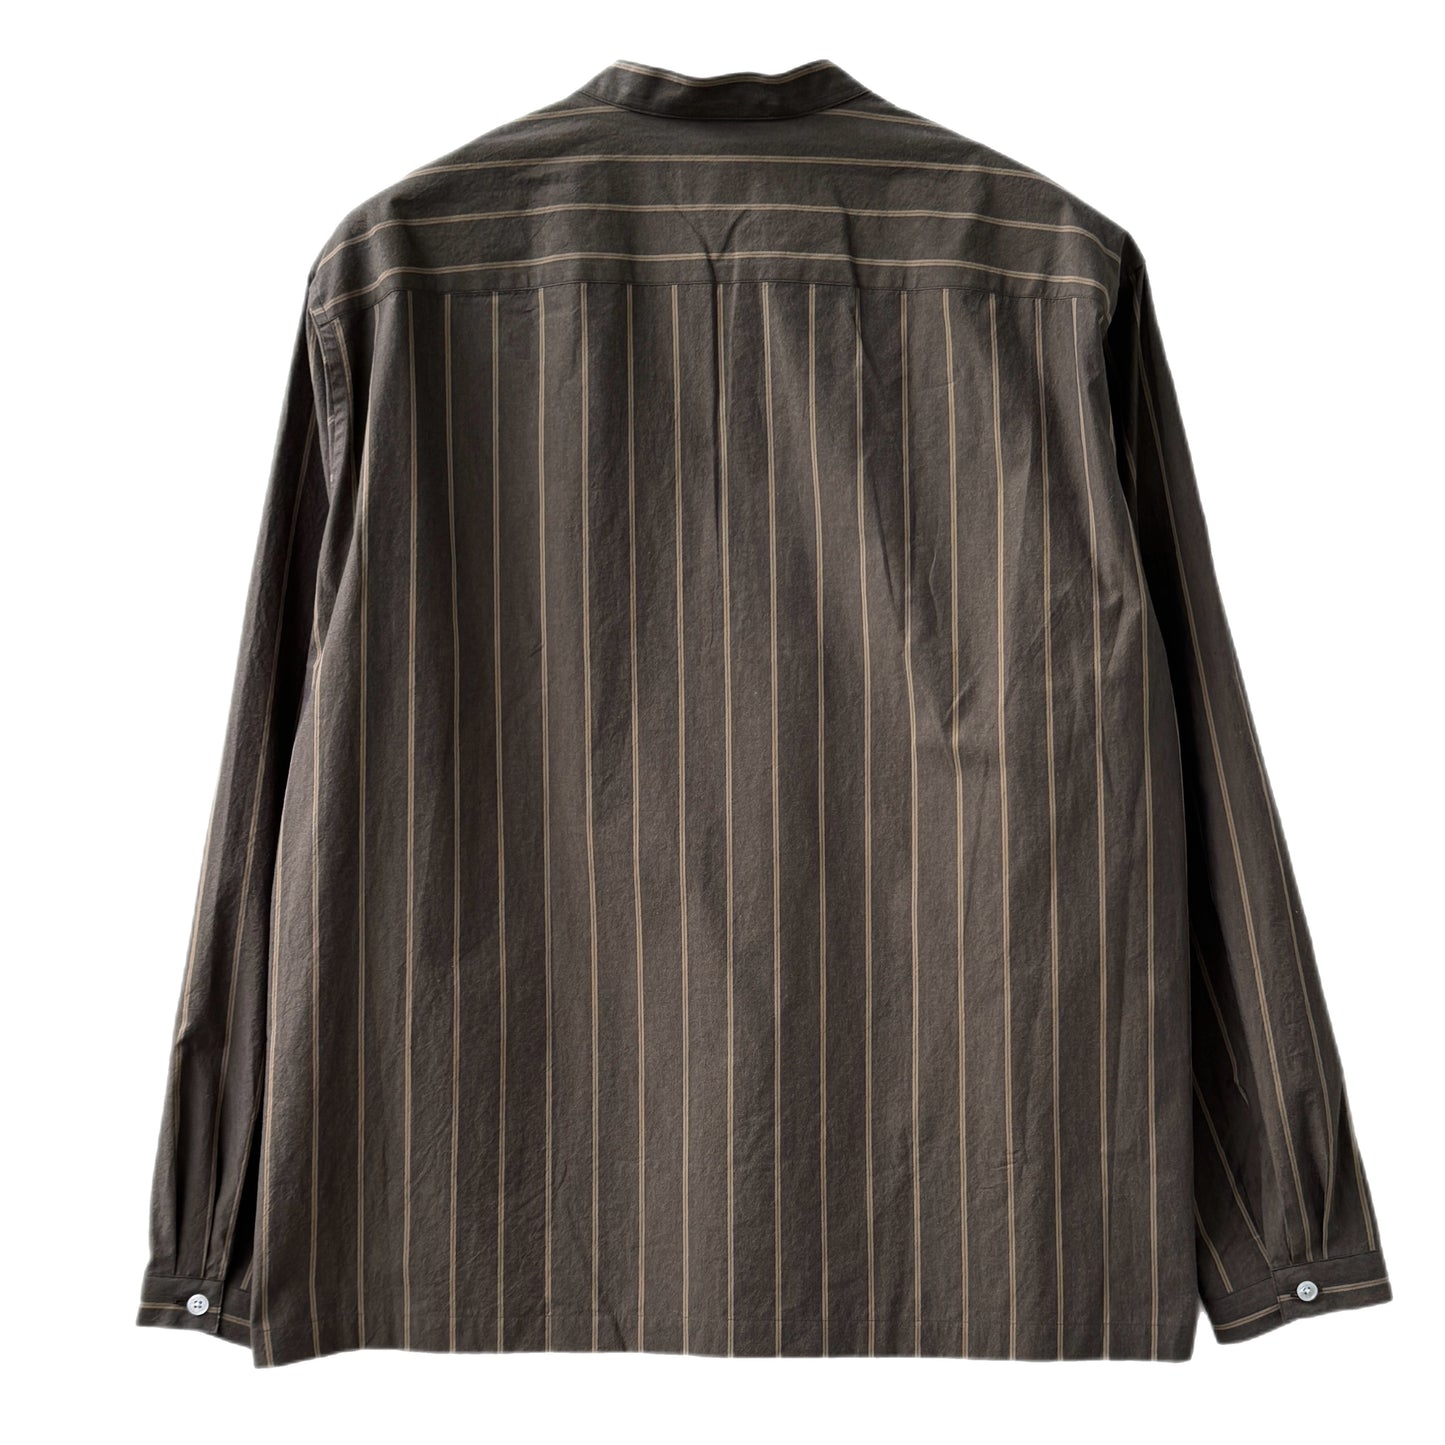 COLONY CLOTHING / コットンストライプ スキッパーシャツ / CC2401-SH06-02